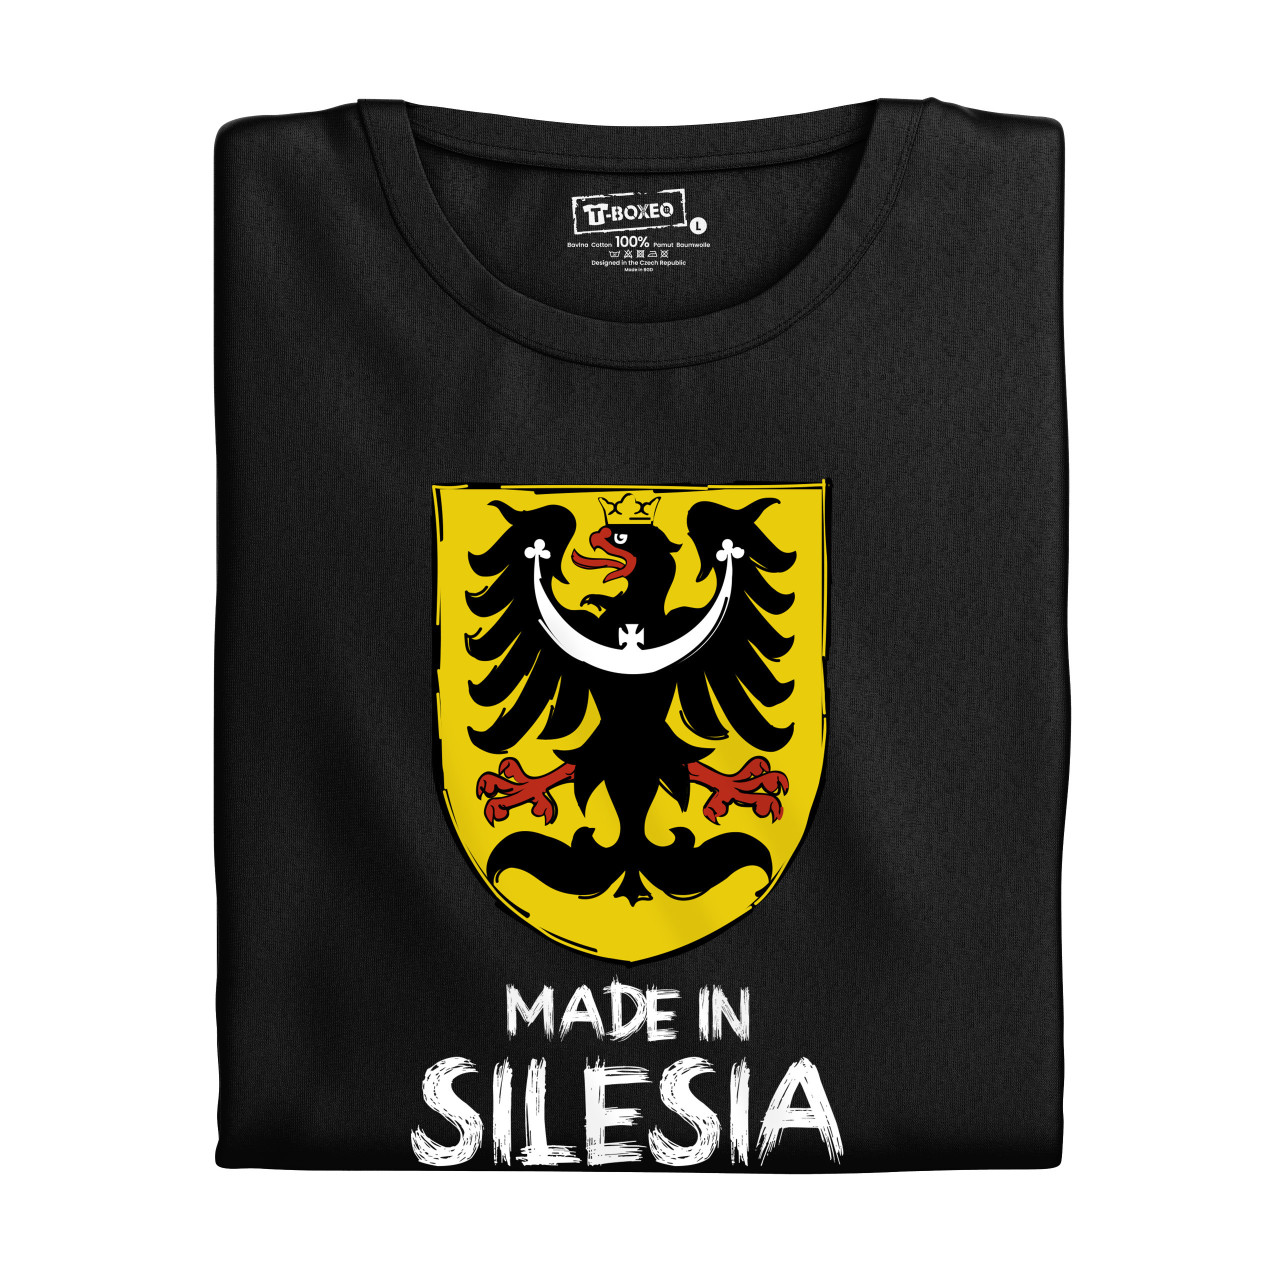 Dámské tričko s potiskem “Made in Silesia” 